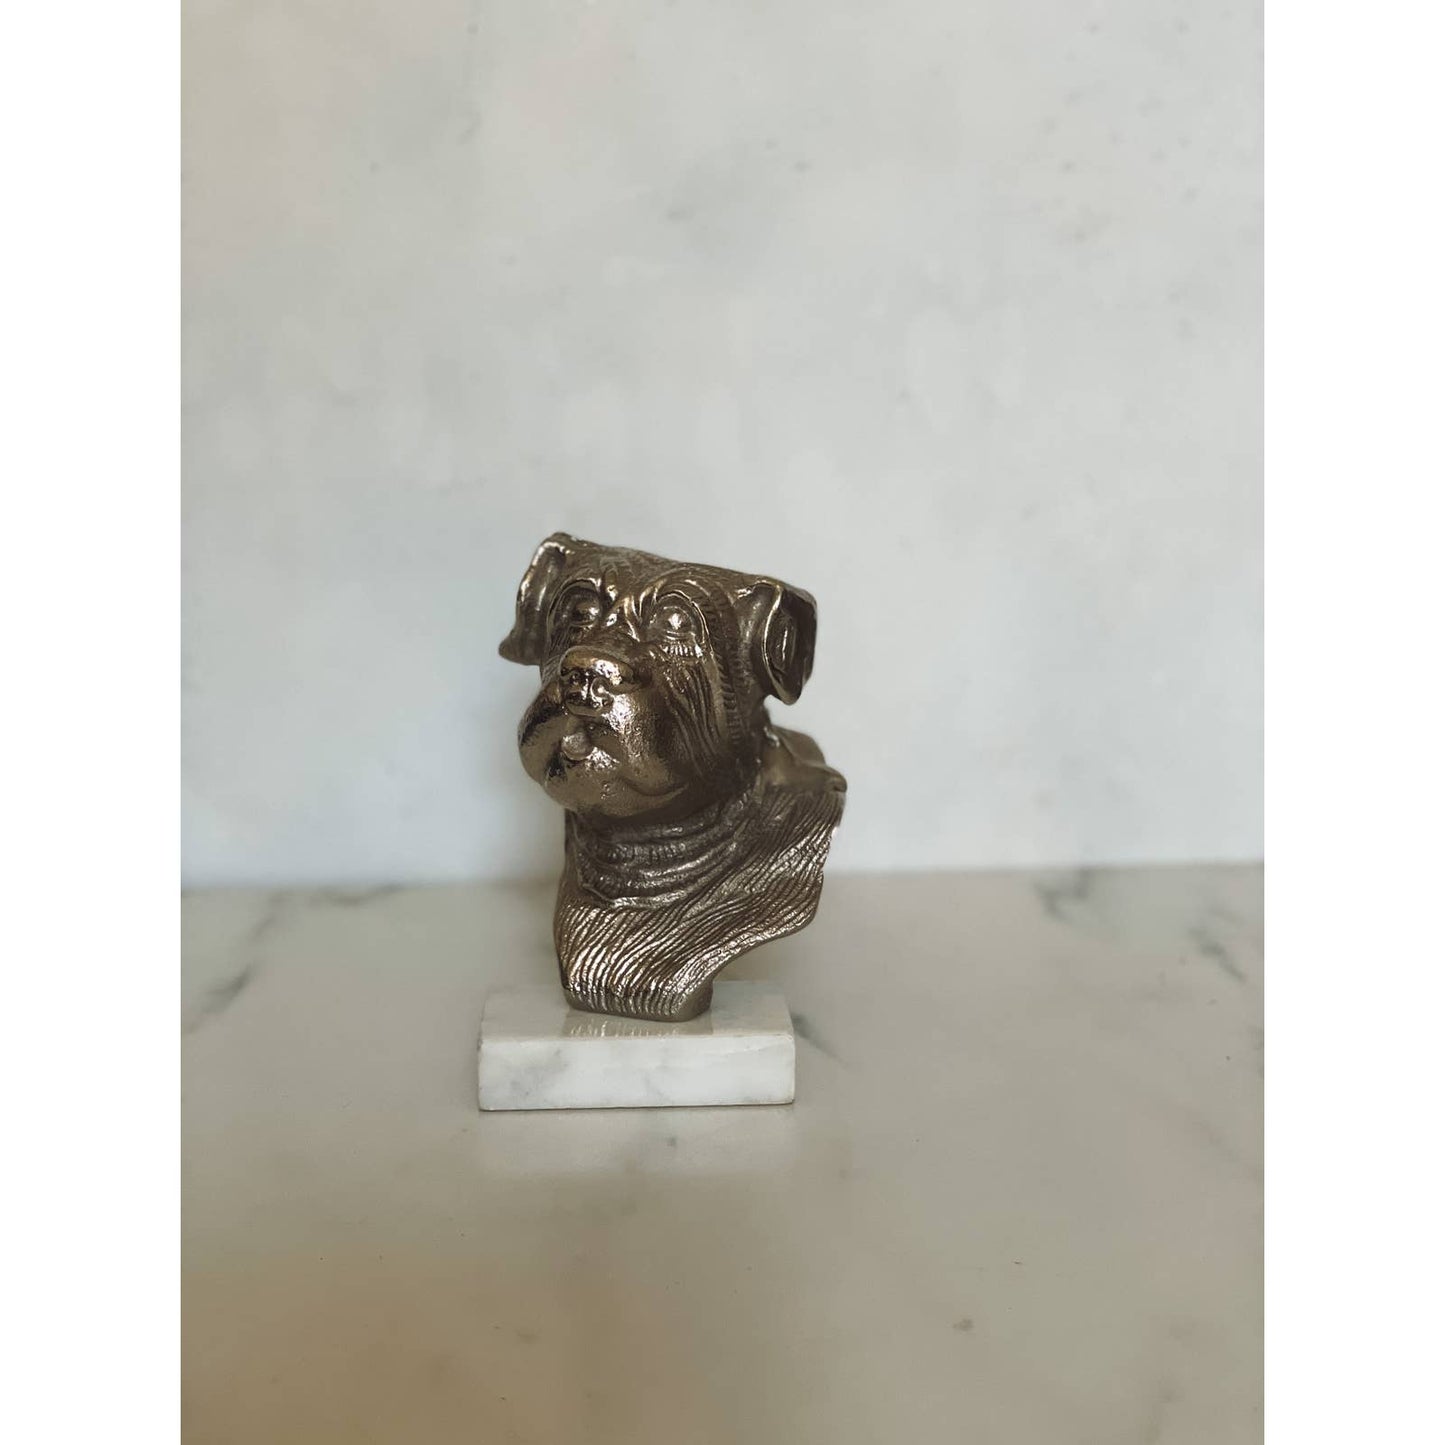 Silver Dog Trophy Bust on White Quartz Base